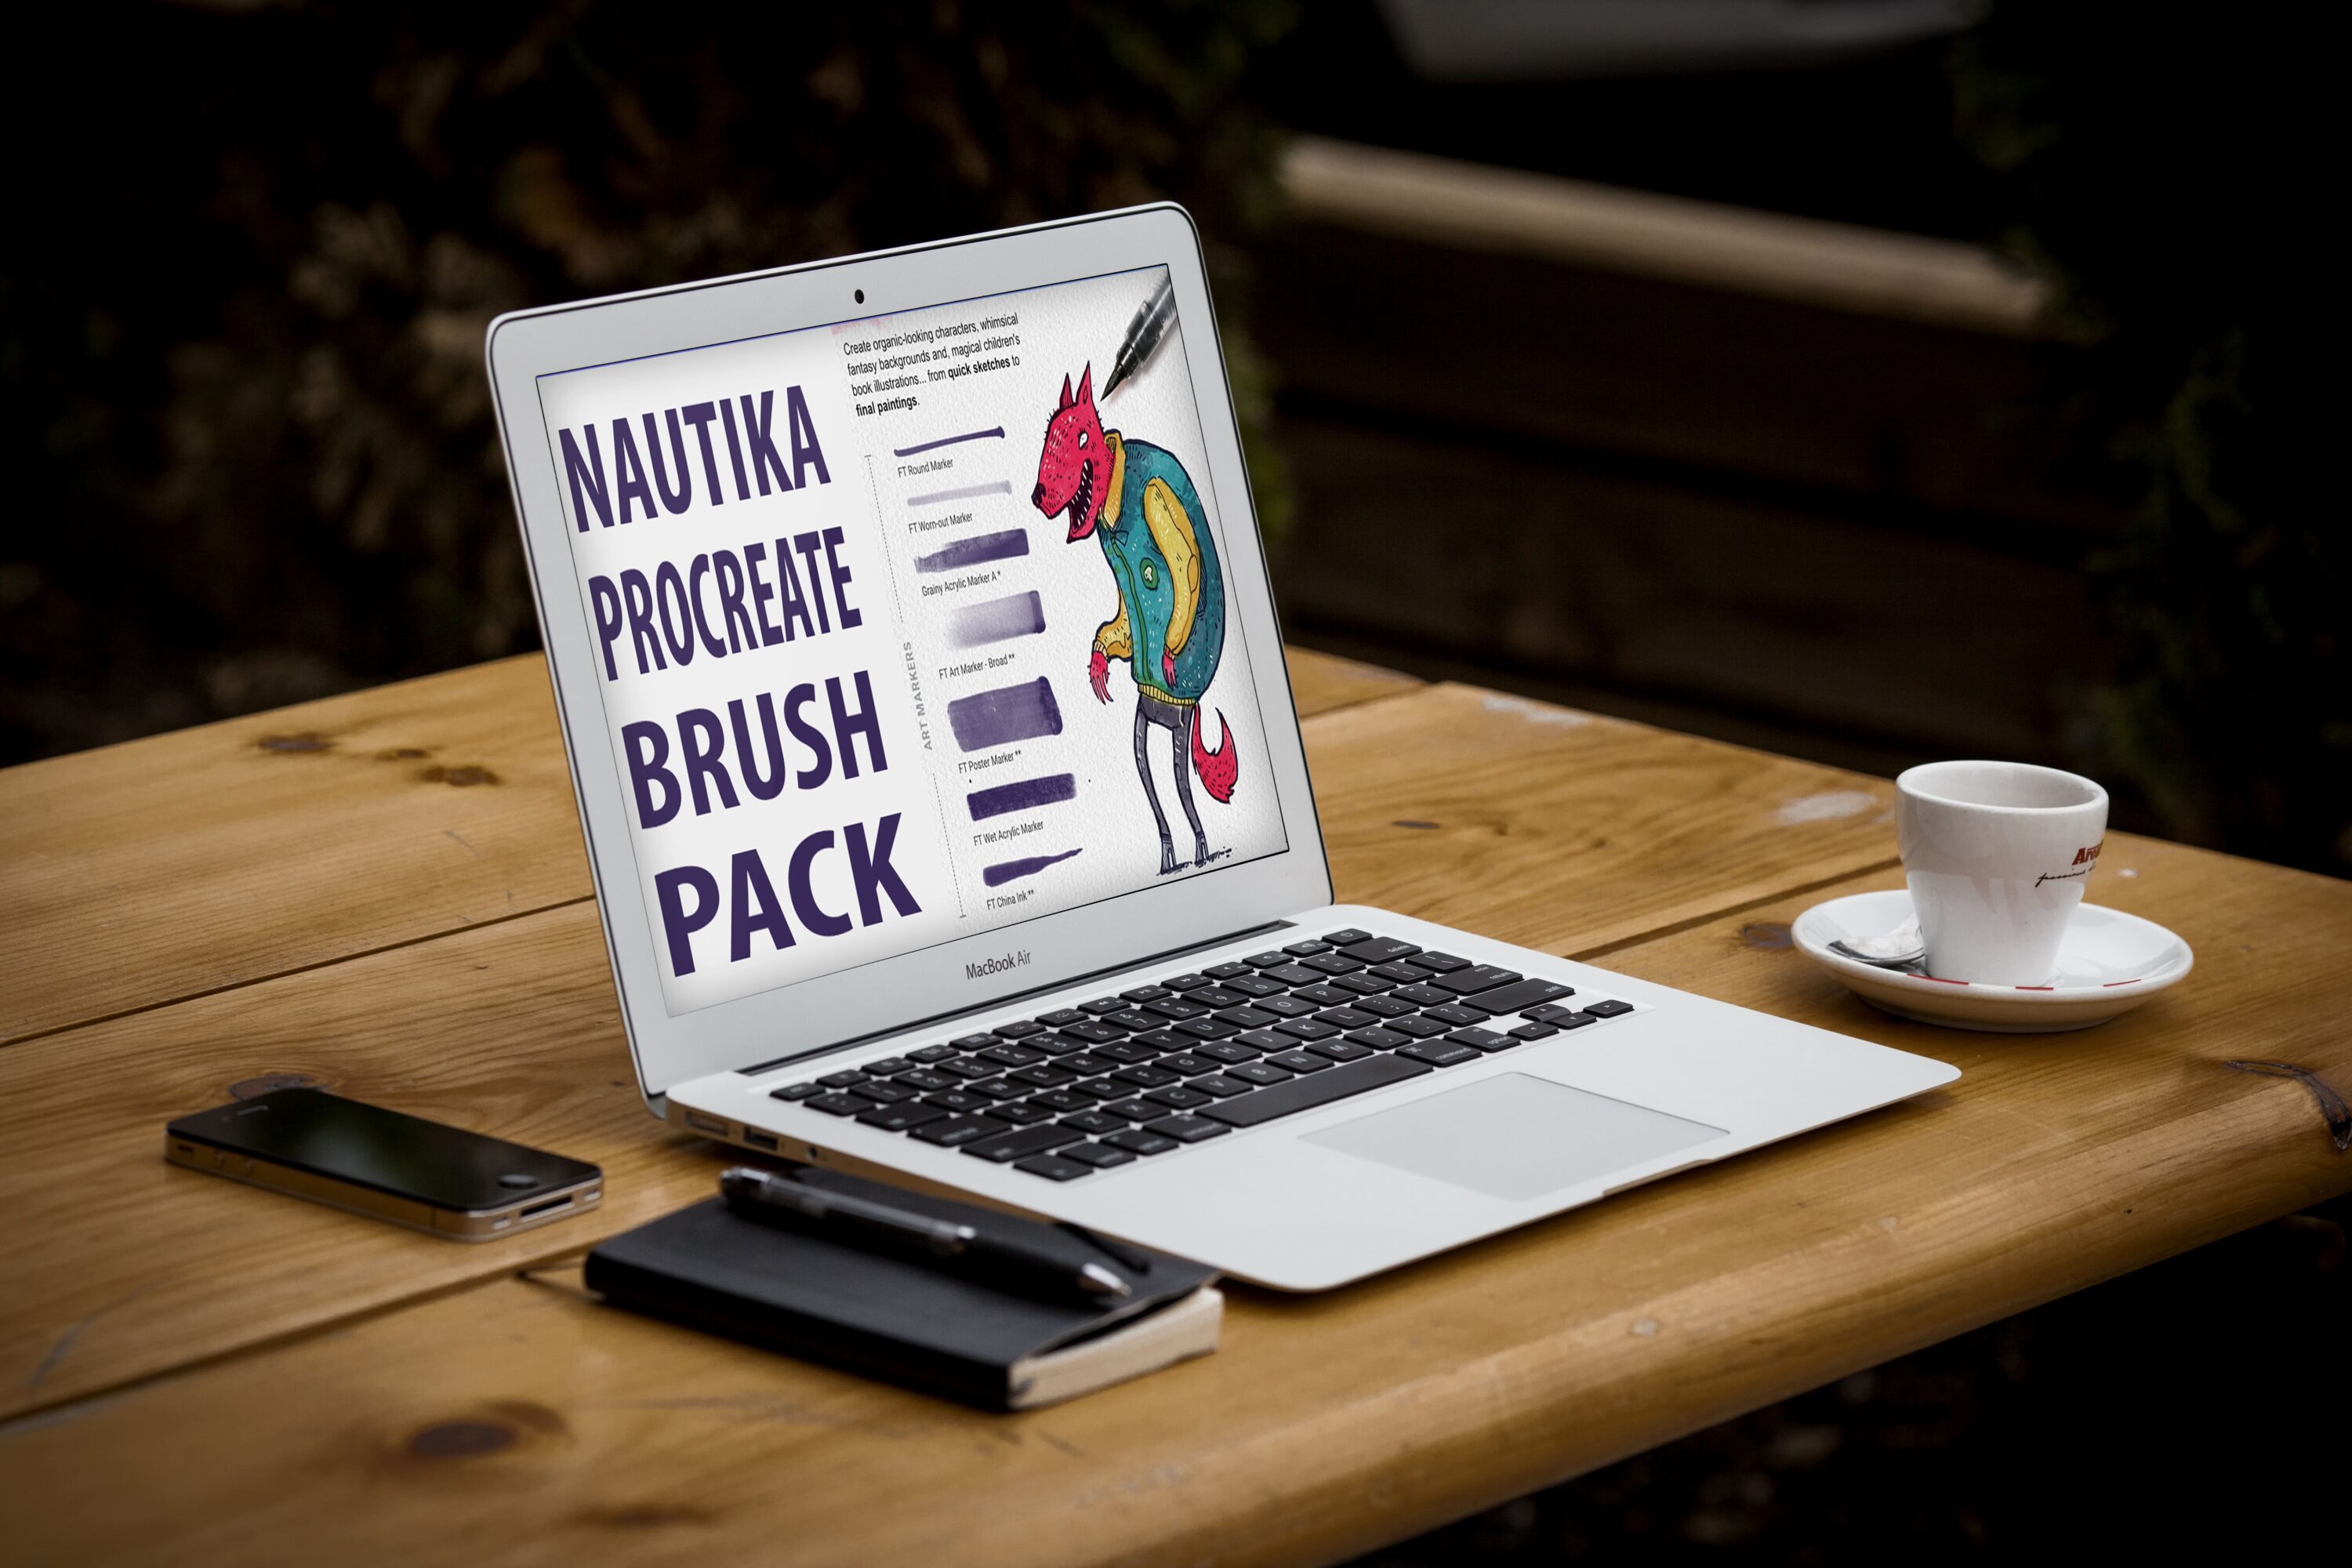 Laptop option of the Nautika Procreate Brush Pack.